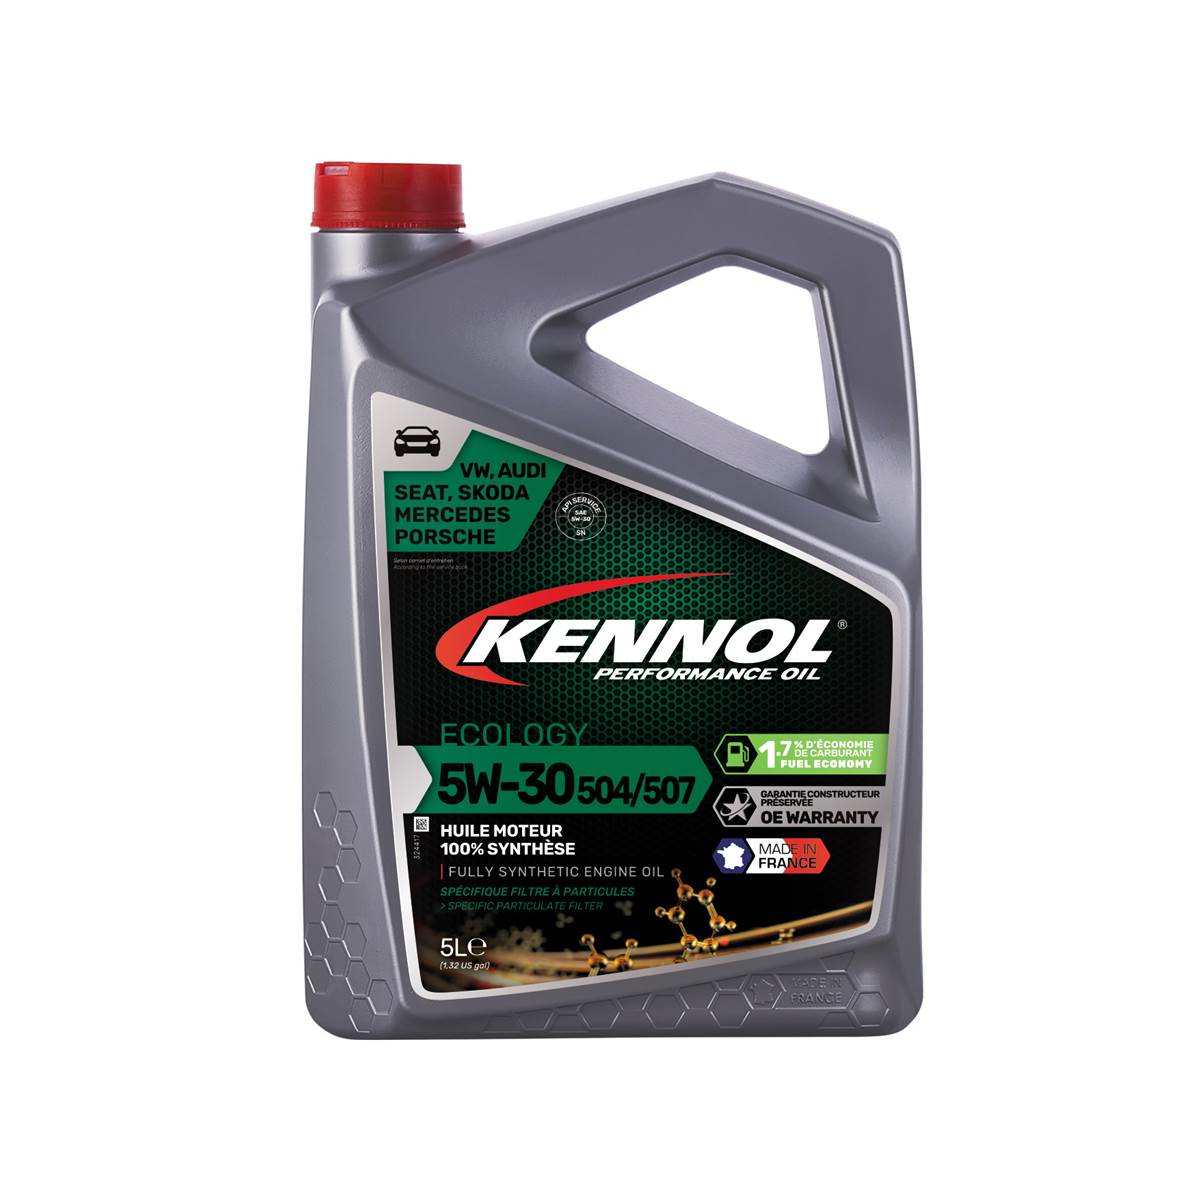 Huile Moteur Kennol Ecology Essence/diesel 5w30 504/507 C3 5l